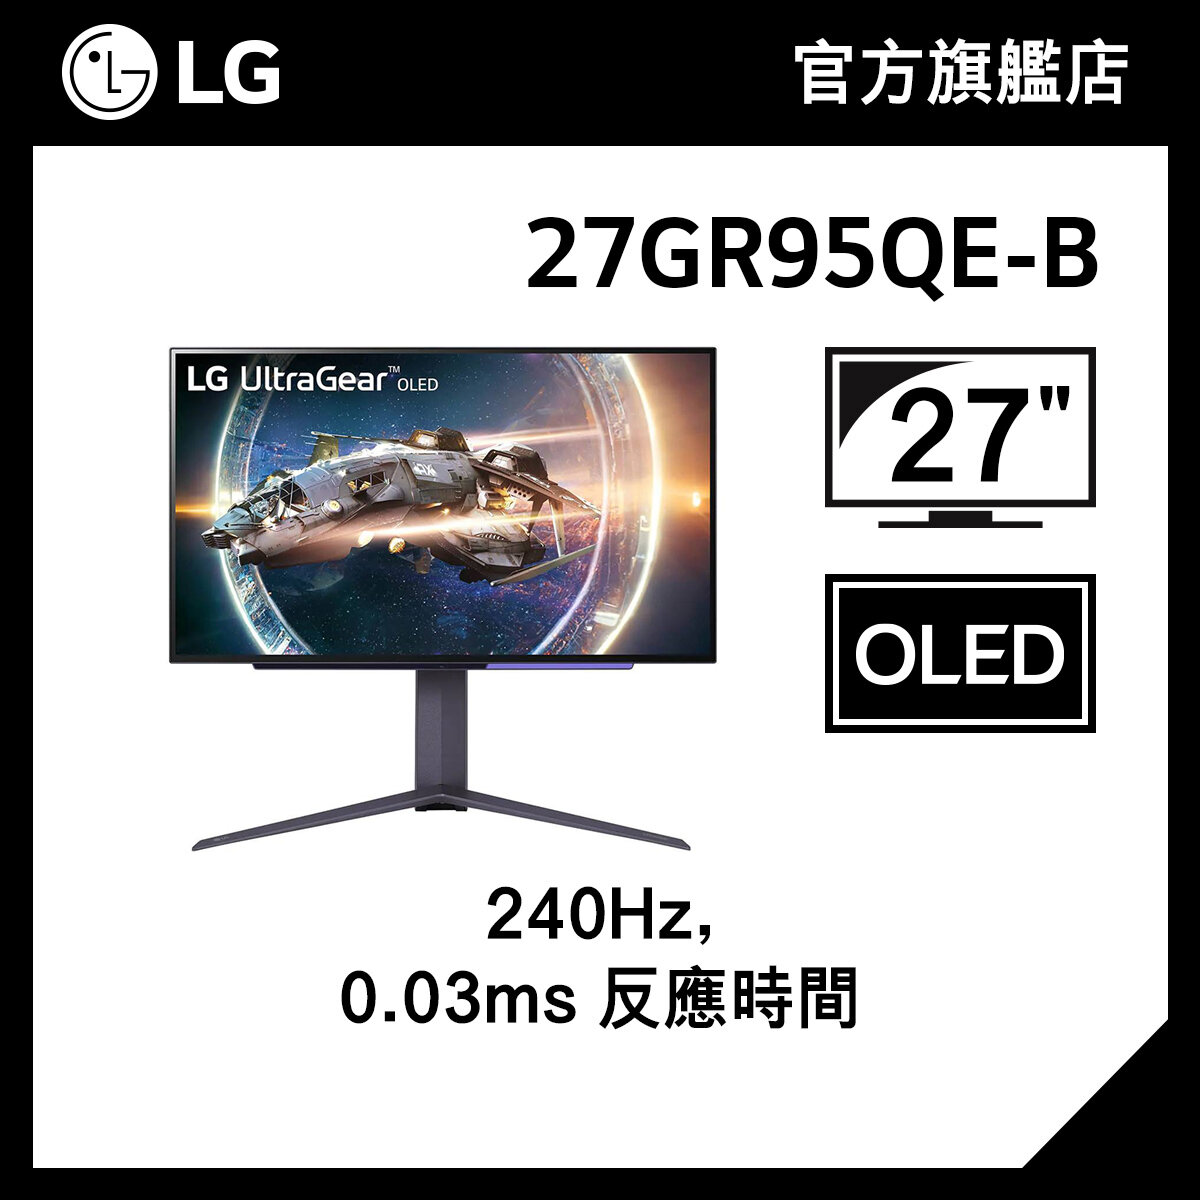 LG UltraGear™ 27" OLED 0.03ms 遊戲顯示器 27GR95QE-B, 240Hz